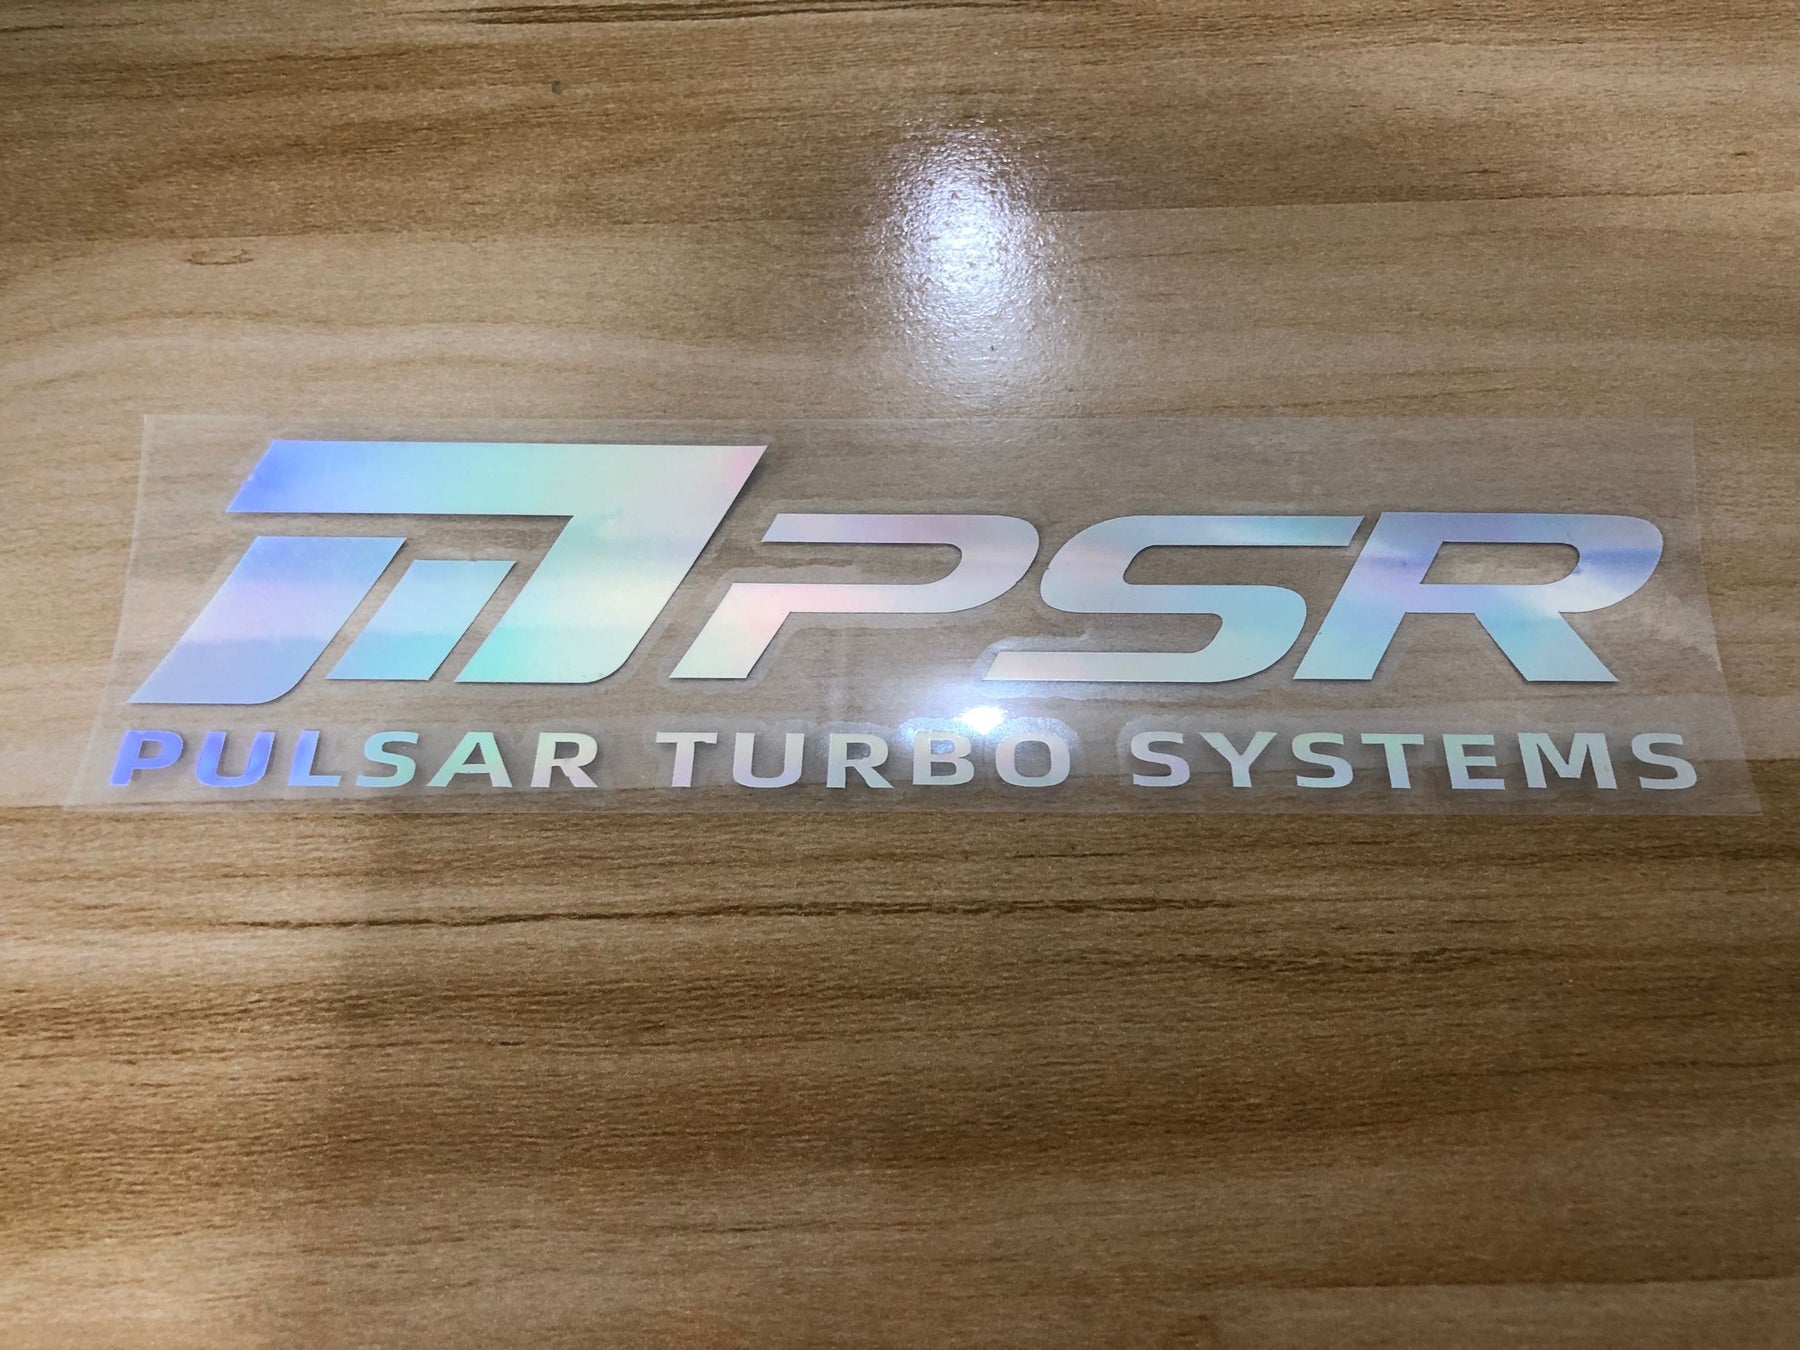 PULSAR Decal Pulsar Turbo Systems(PSR)